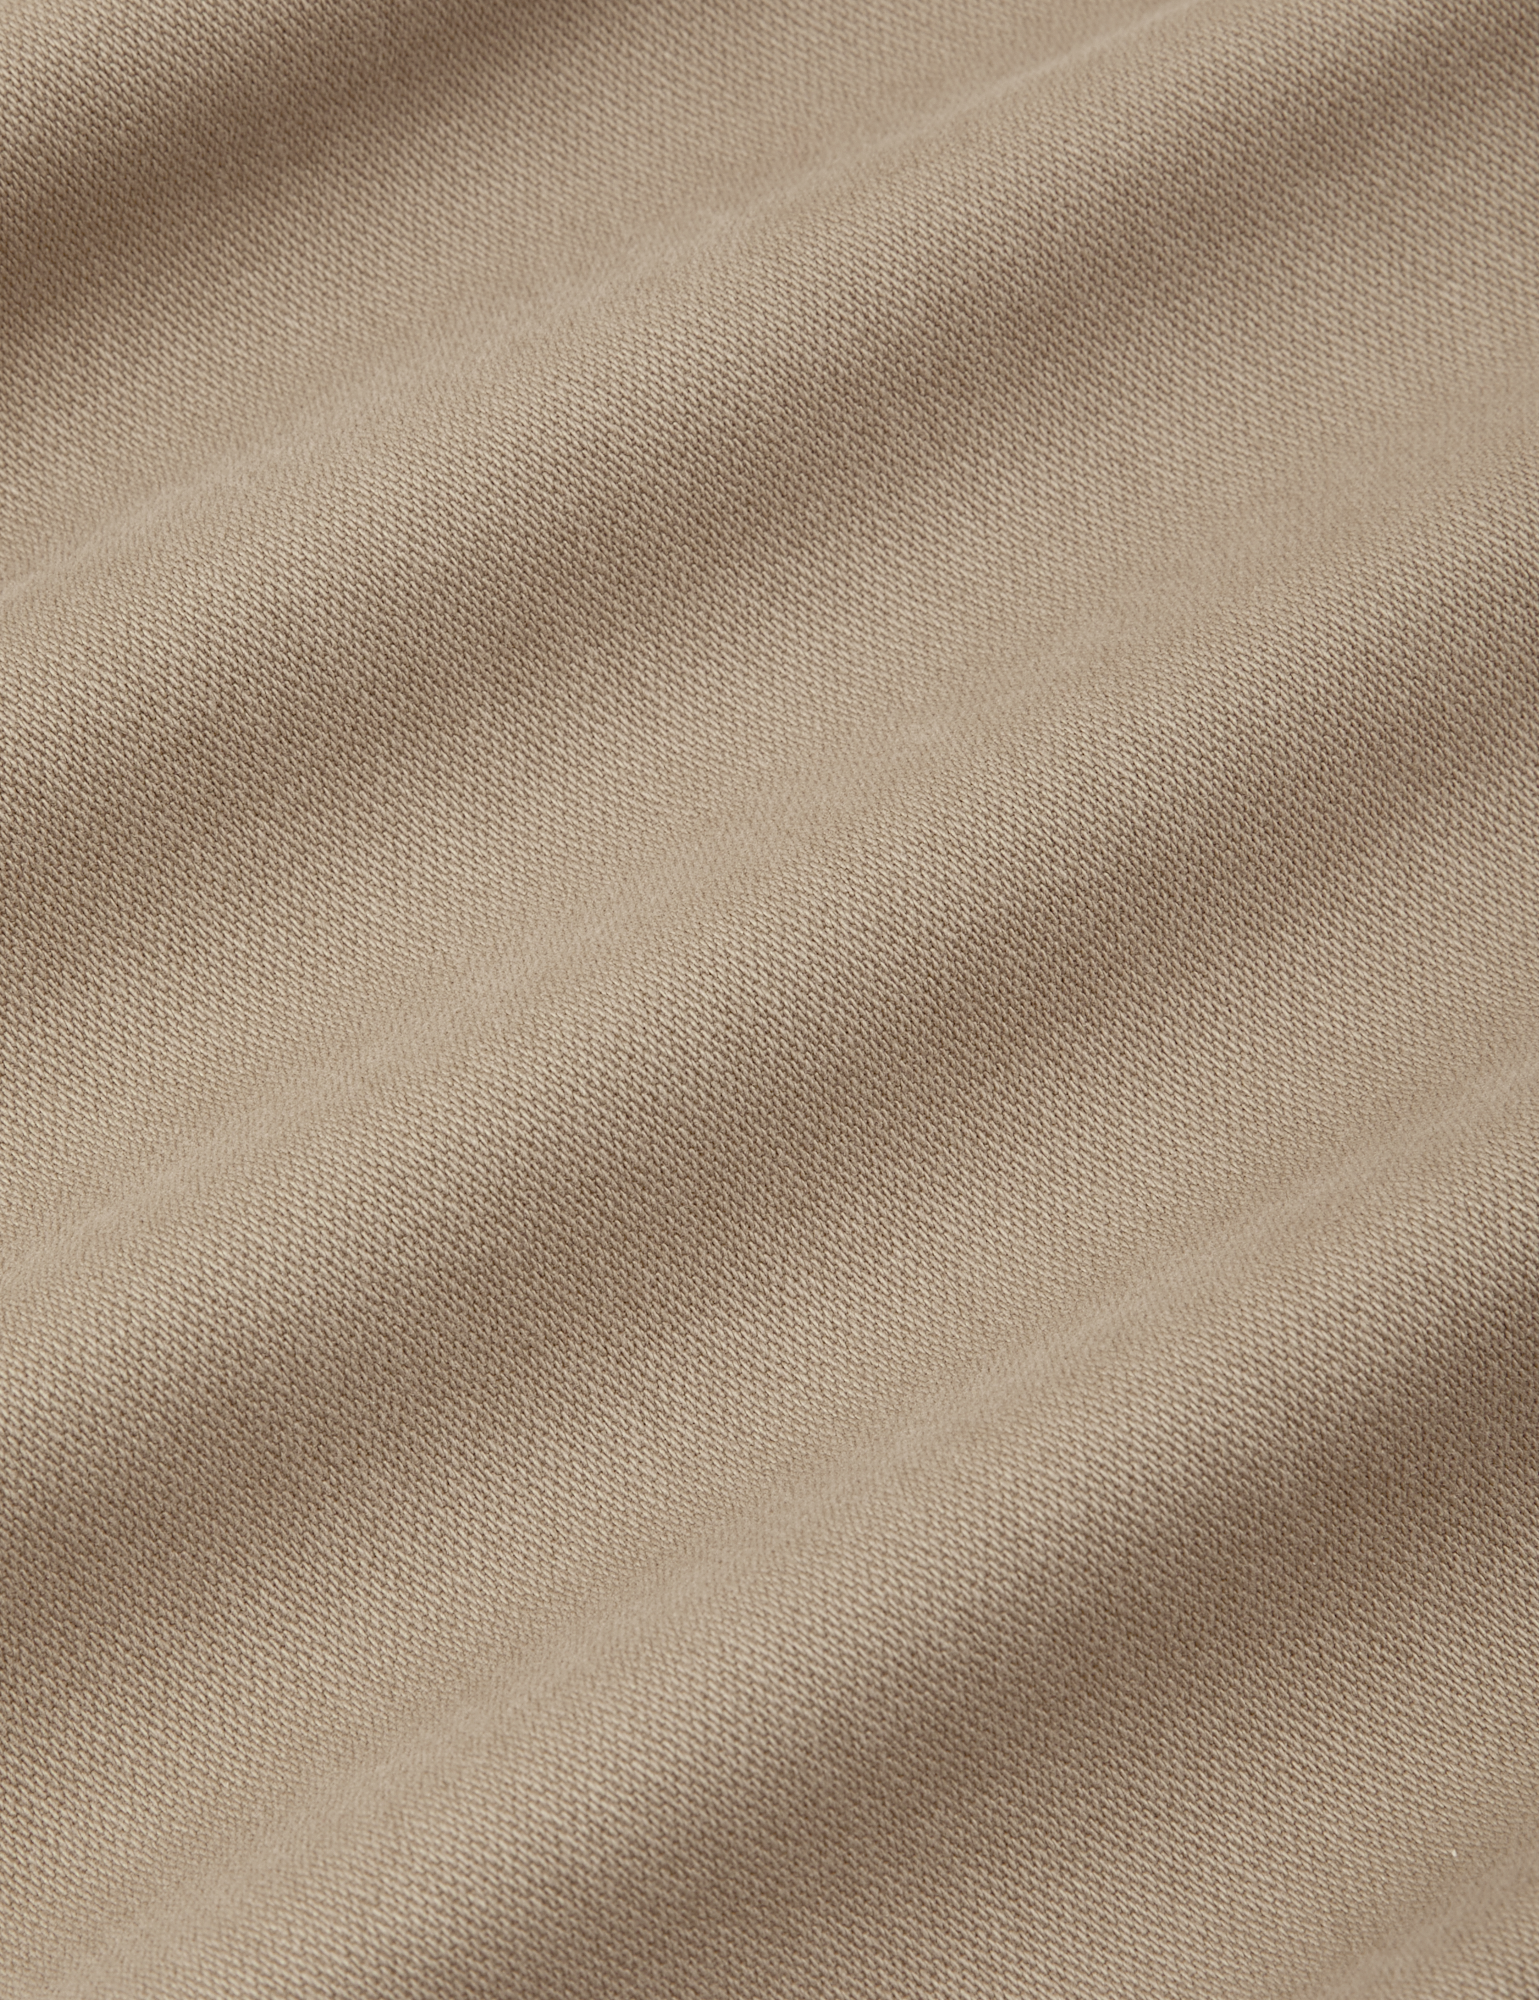 Original Overalls in Khaki Grey fabric detail